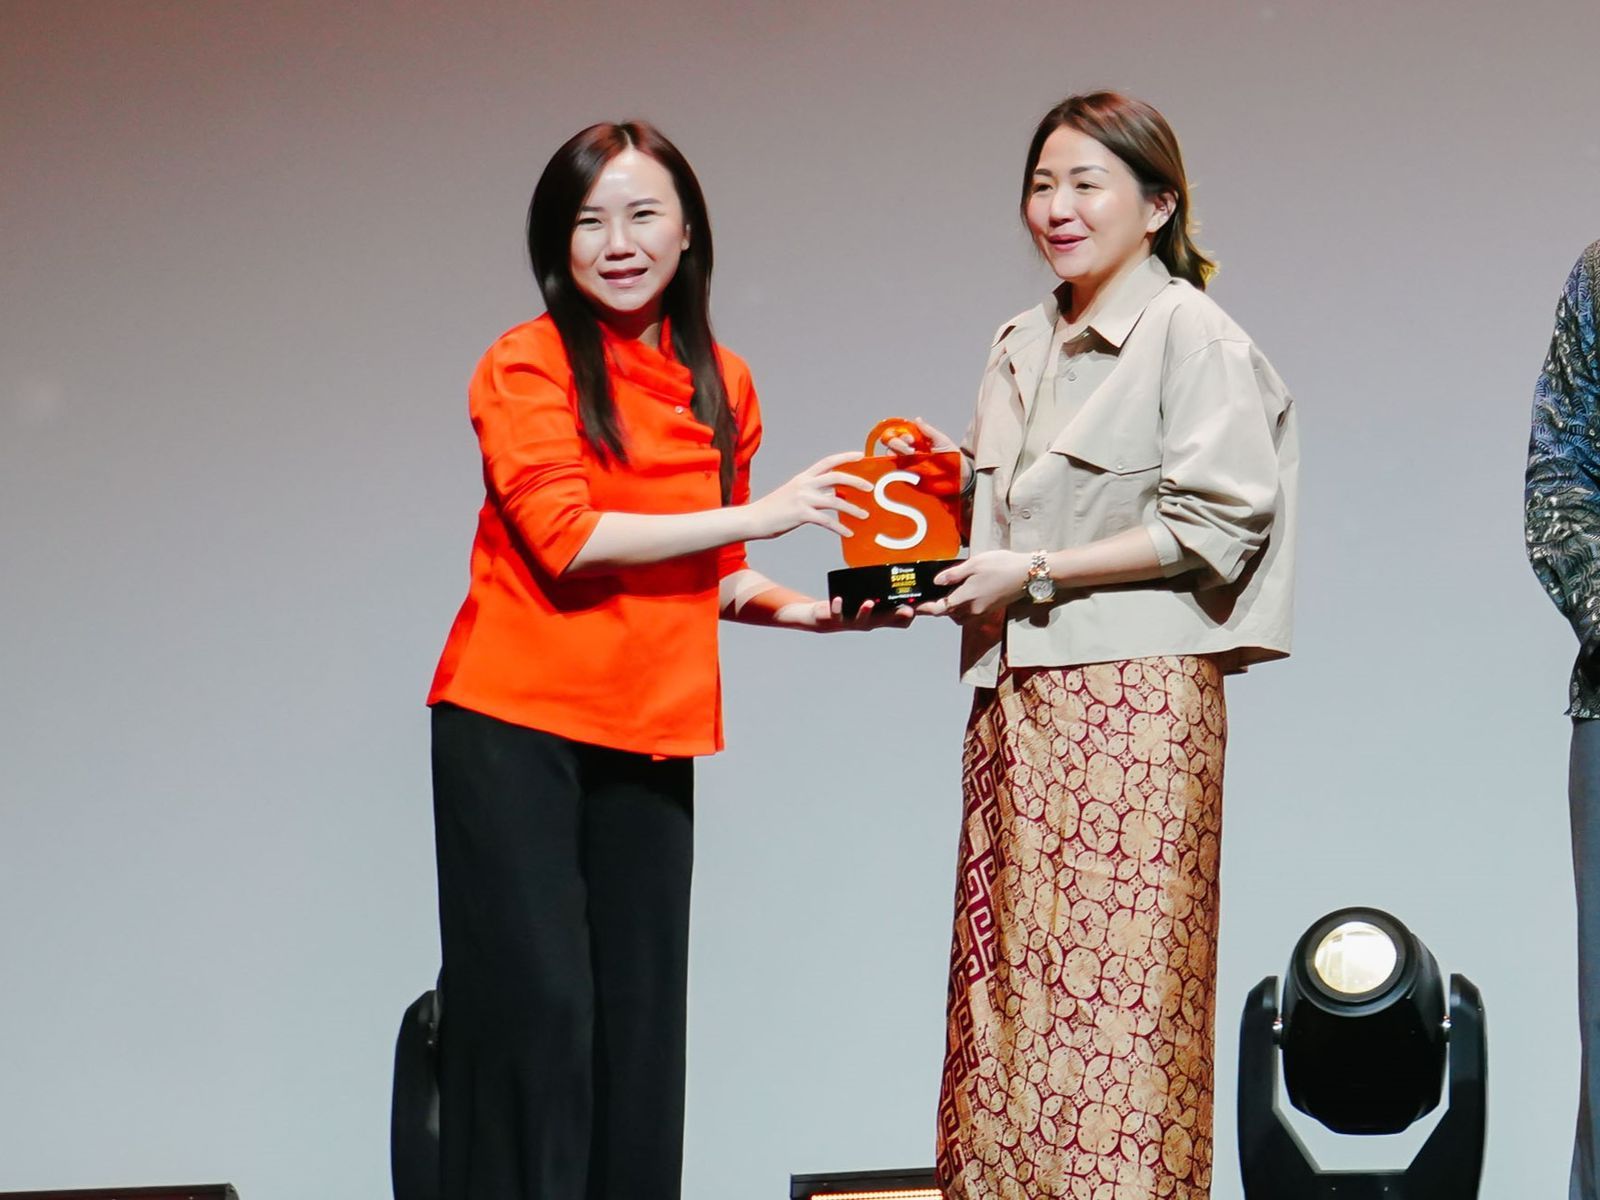 Christin Djuarto, Direktur Eksekutif Shopee Indonesia Memberikan Penghargaan Kategori Super Growing Export UMKM kepada Diana Tan, Pemilik Dushishoes di Shopee.